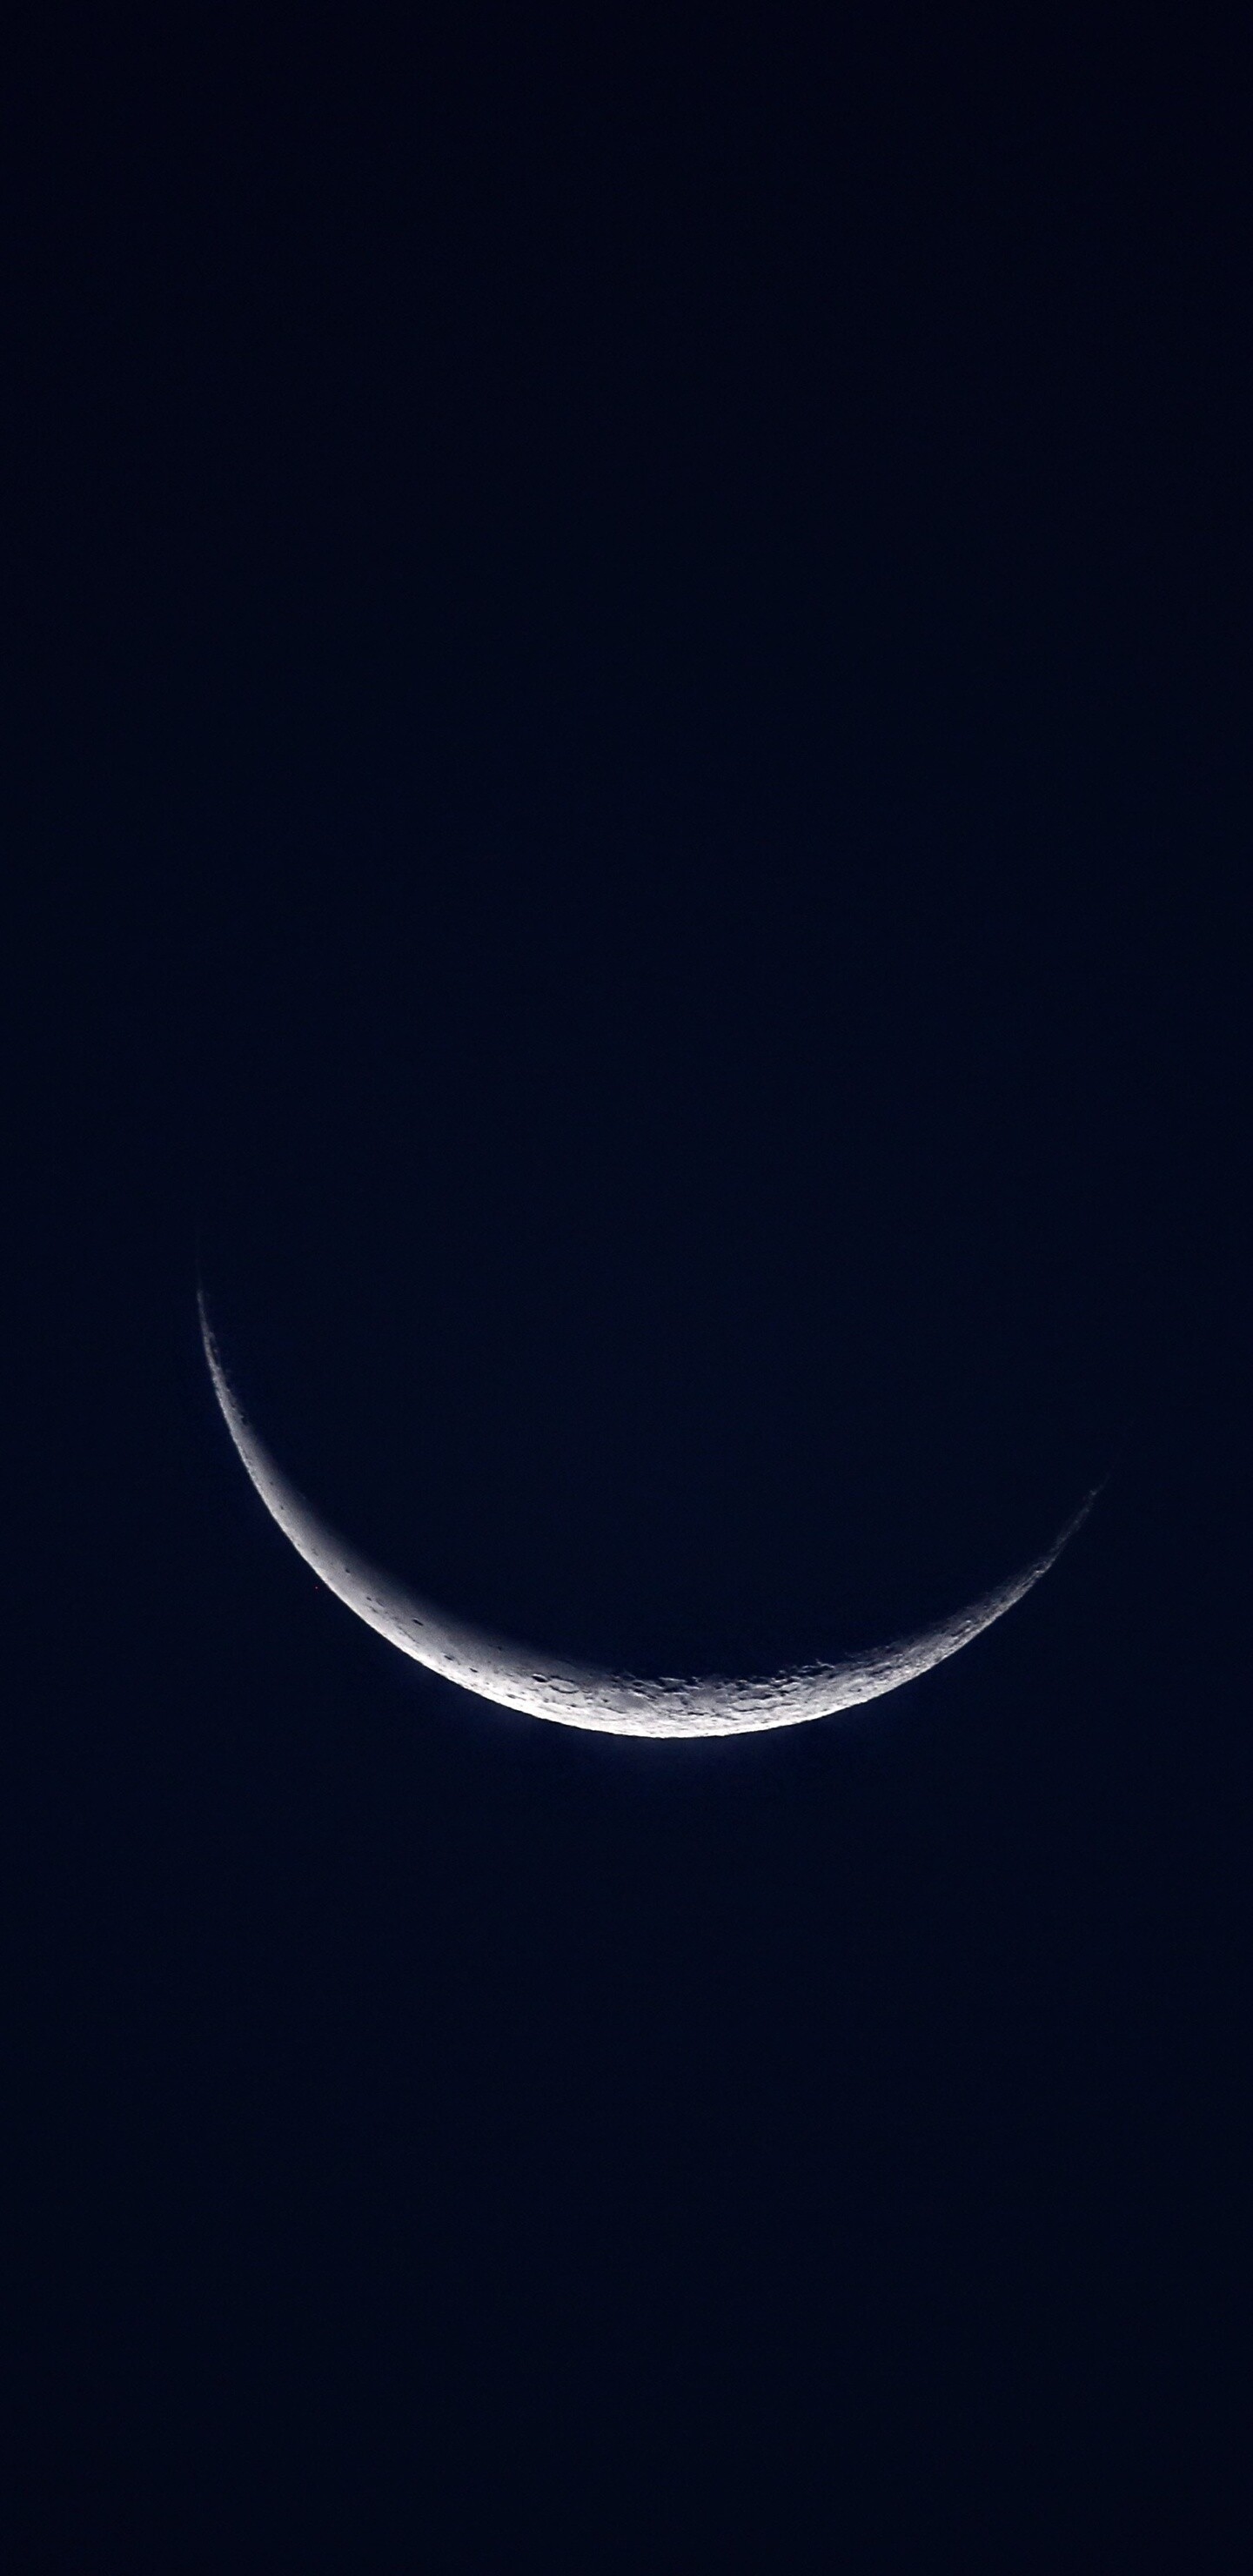 Moon: Crescent, Night sky, Lunar phase. 1440x2960 HD Wallpaper.